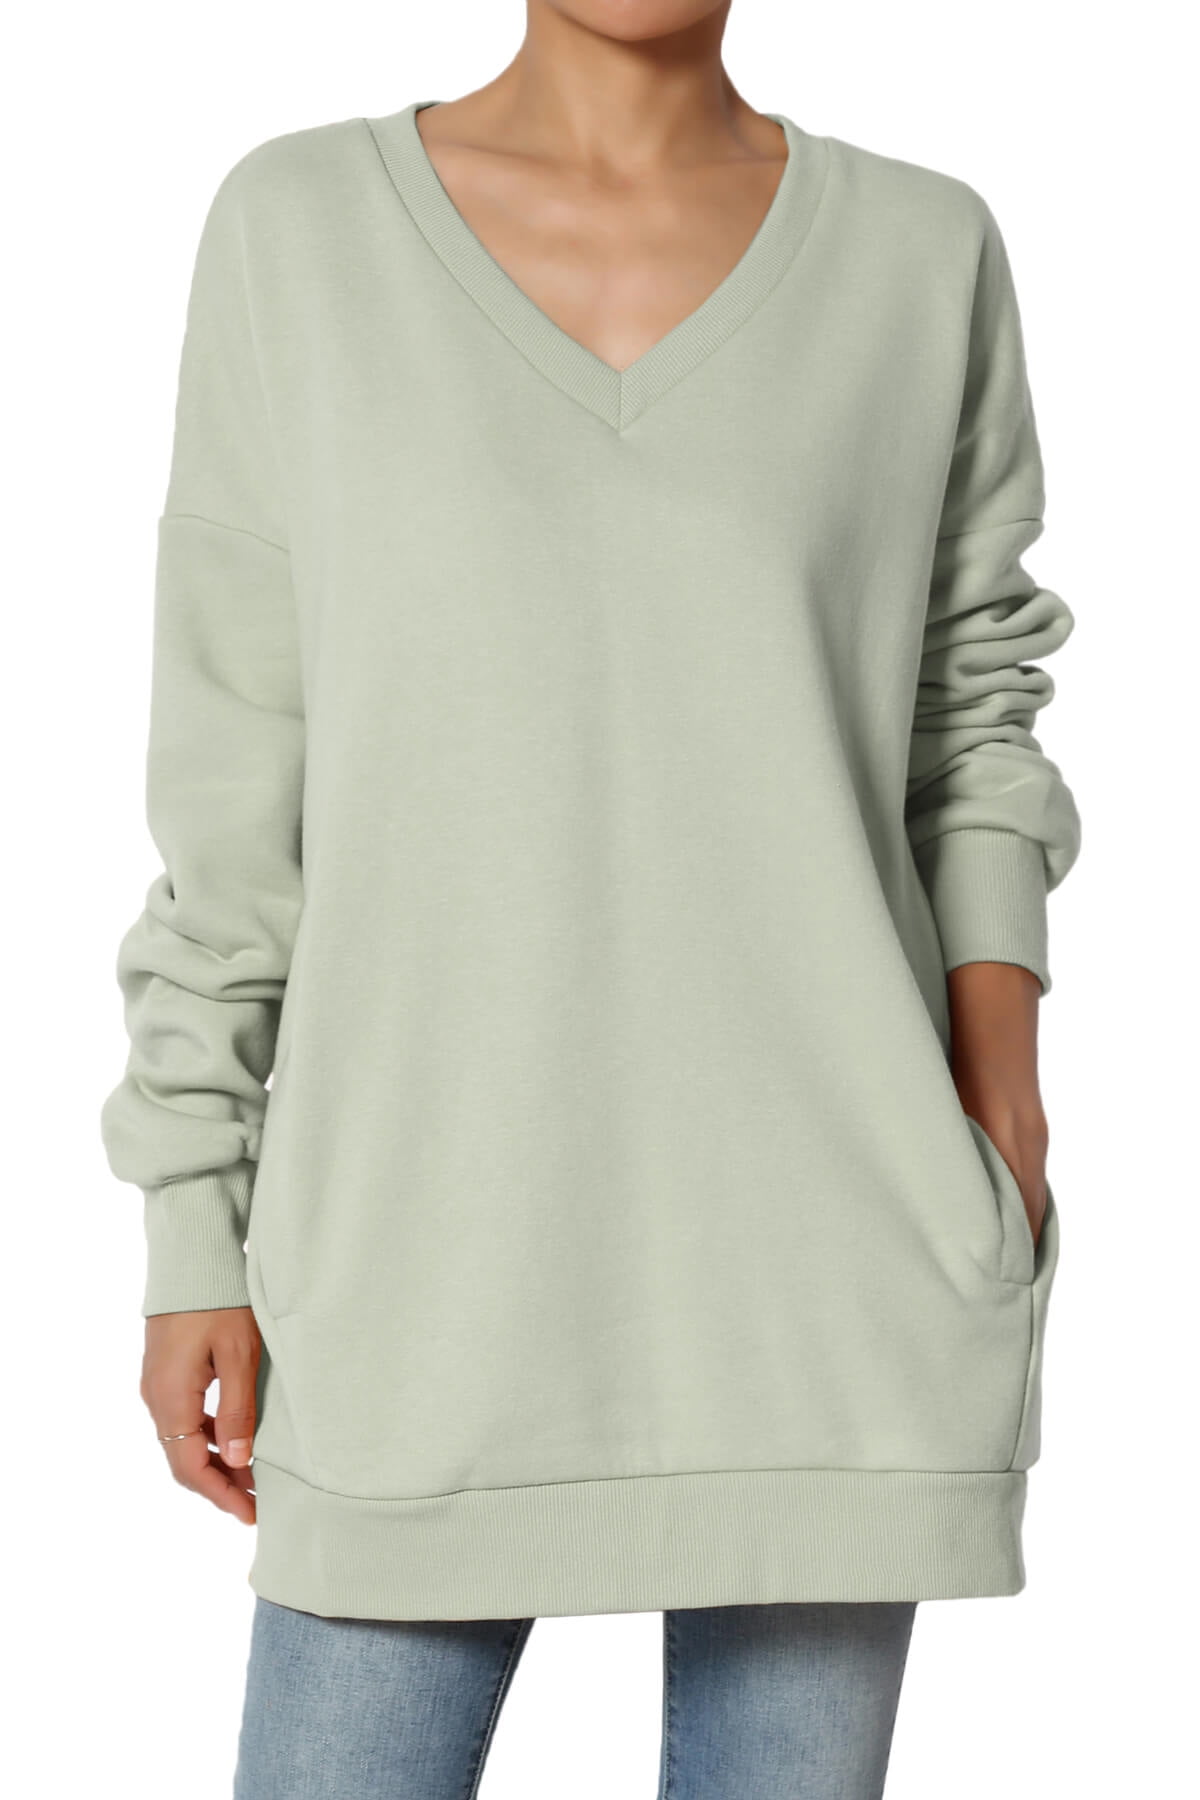 TheMogan Women's S~3X Oversized V-Neck Long Sleeve Pocket Fleece Sweatshirts  